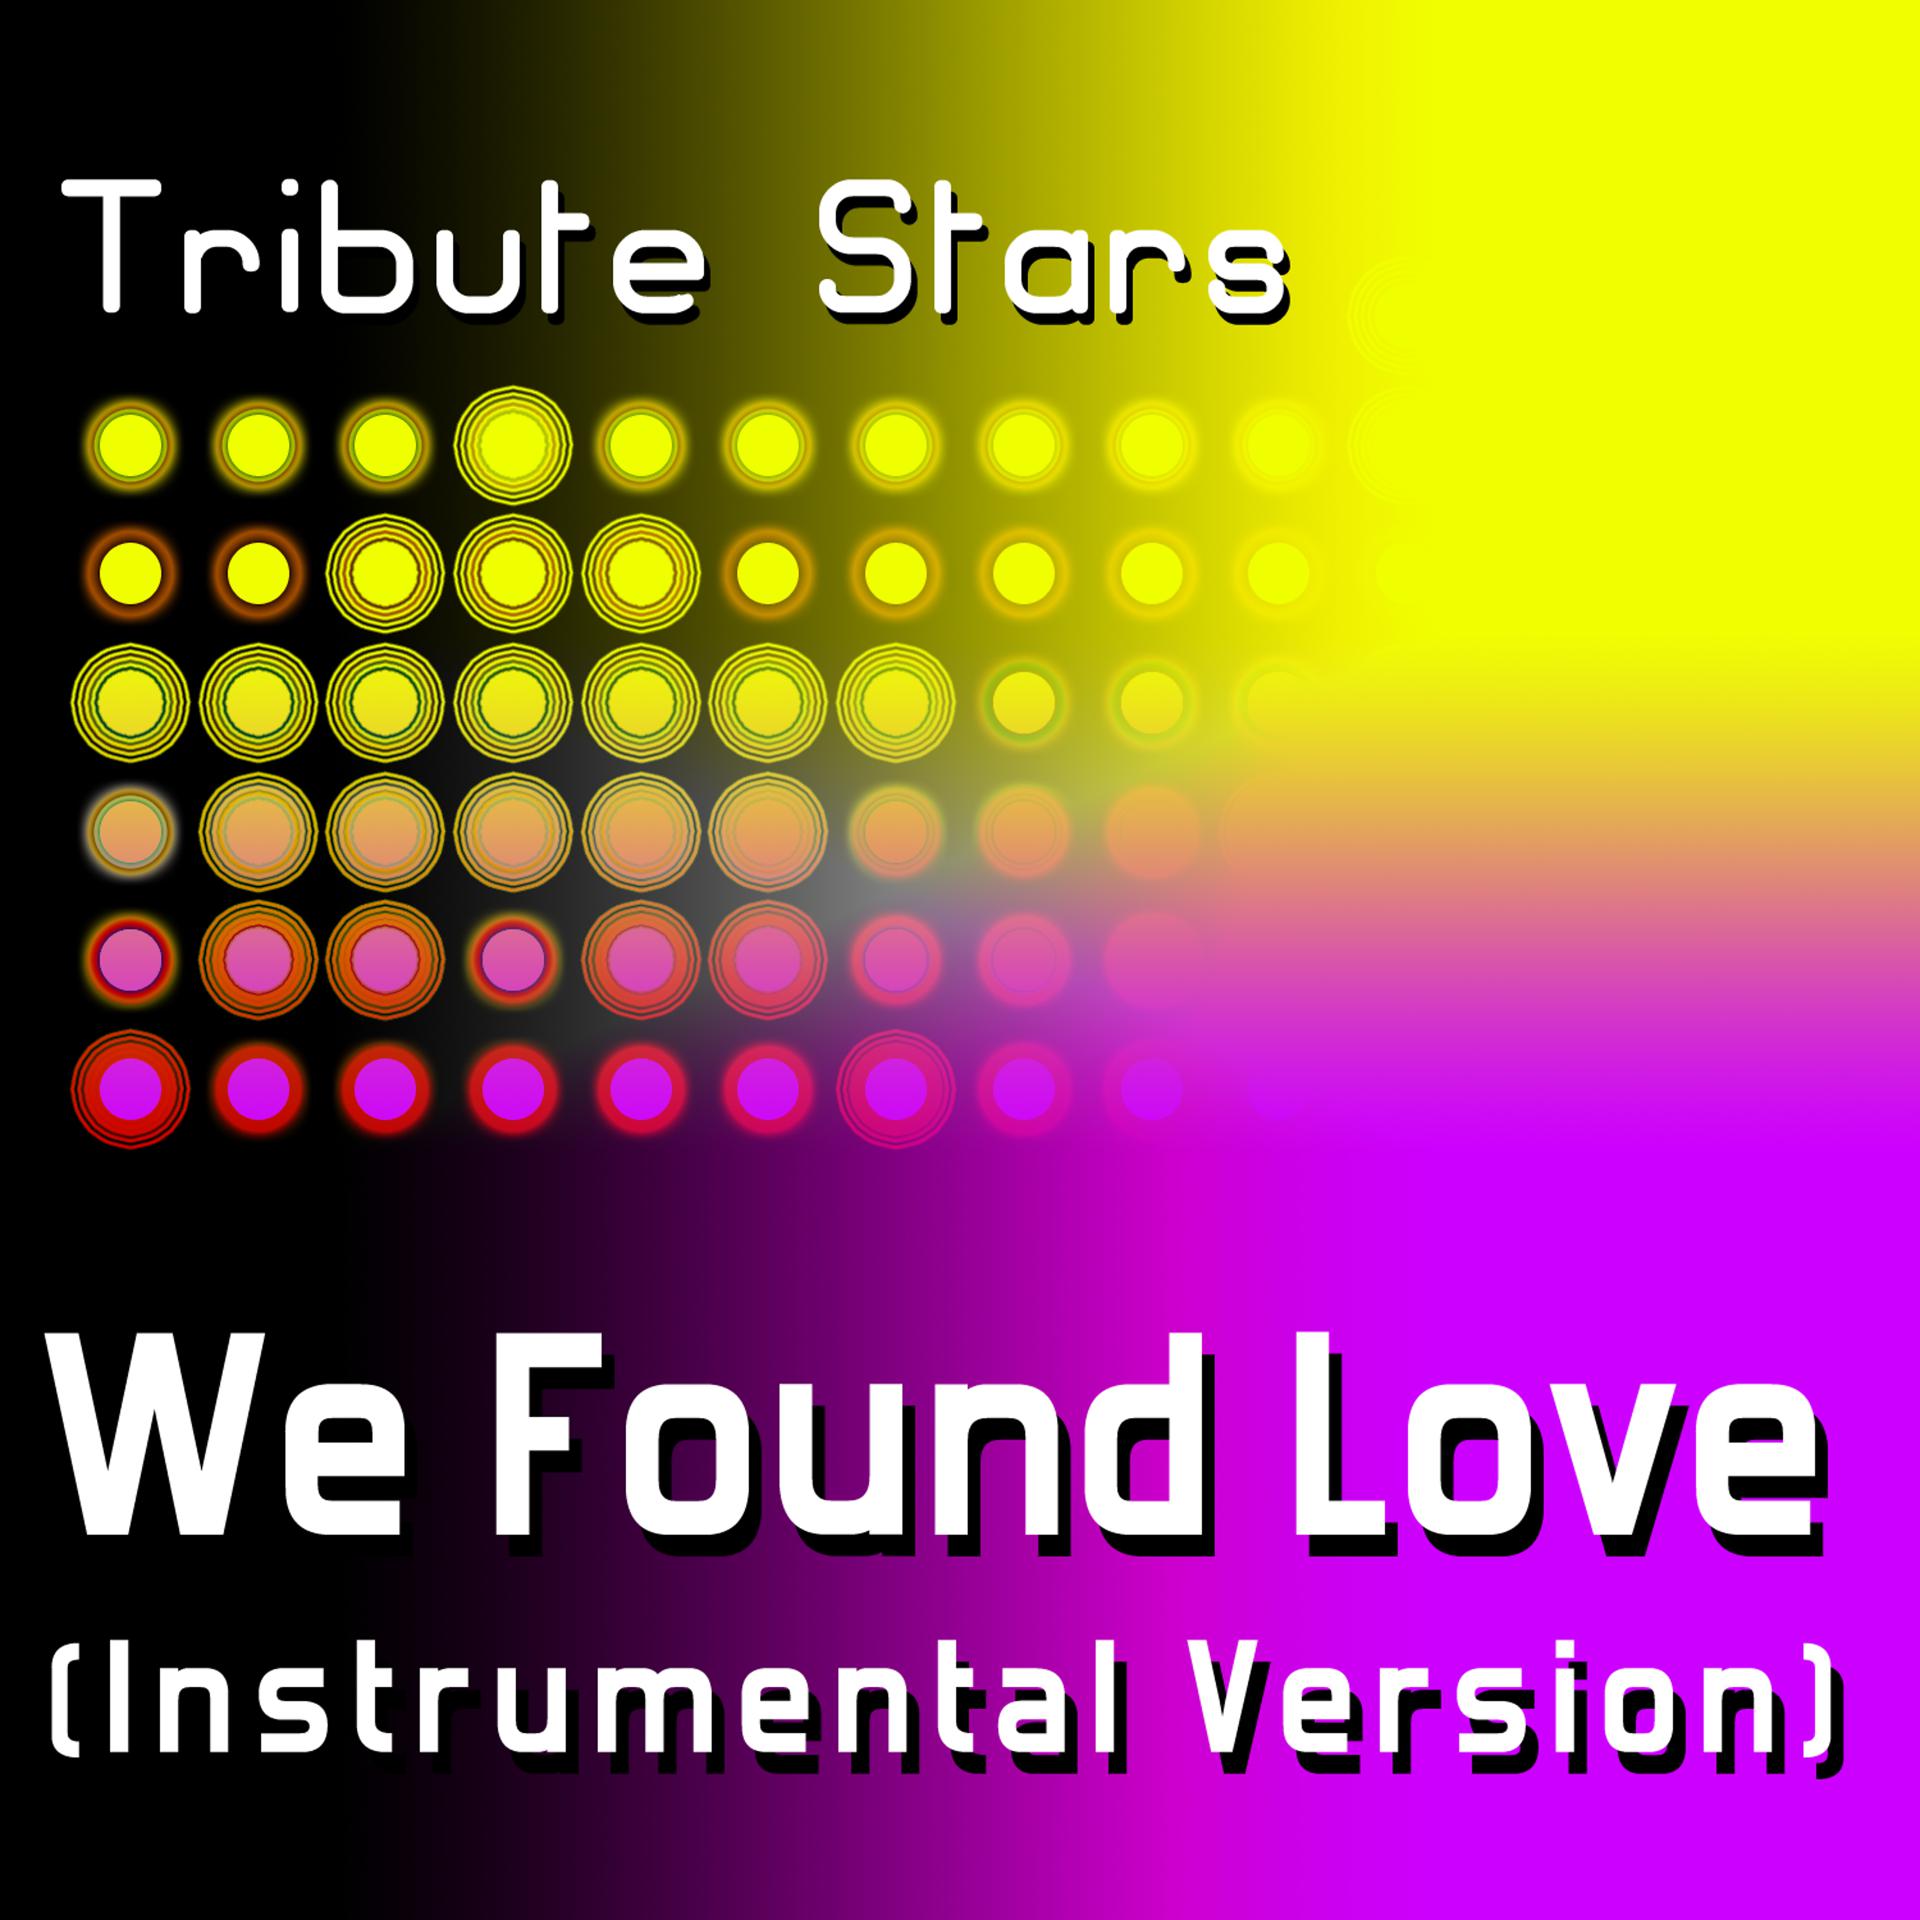 Постер к треку Tribute Stars - Rihanna feat. Calvin Harris - We Found Love (Instrumental Version)